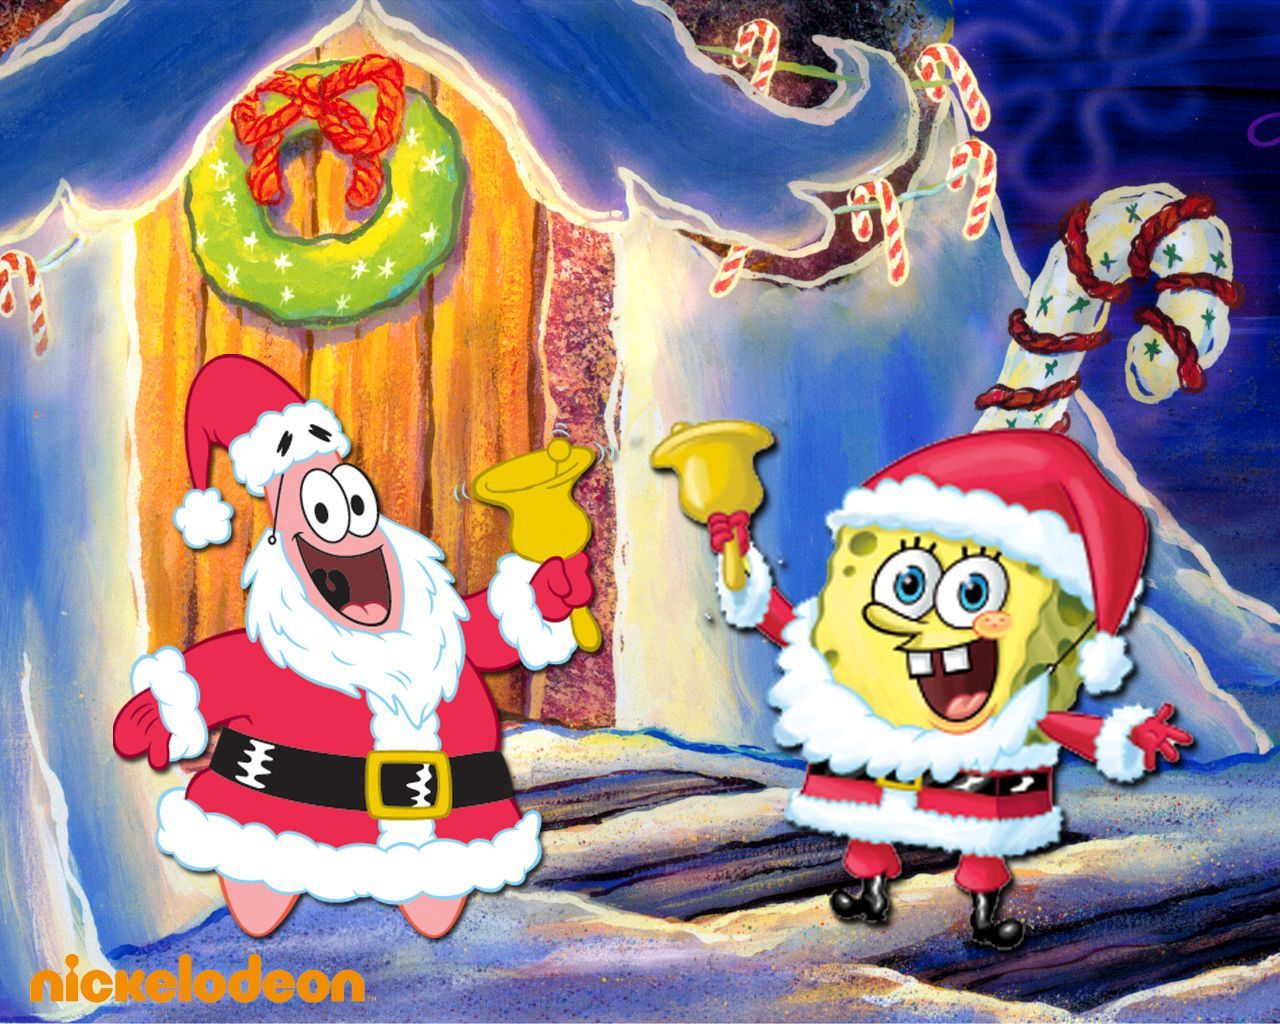 Spongebob Squarepants Wallpaper: Spongebob & Patrick. Spongebob christmas, Cute christmas wallpaper, Christmas wallpaper